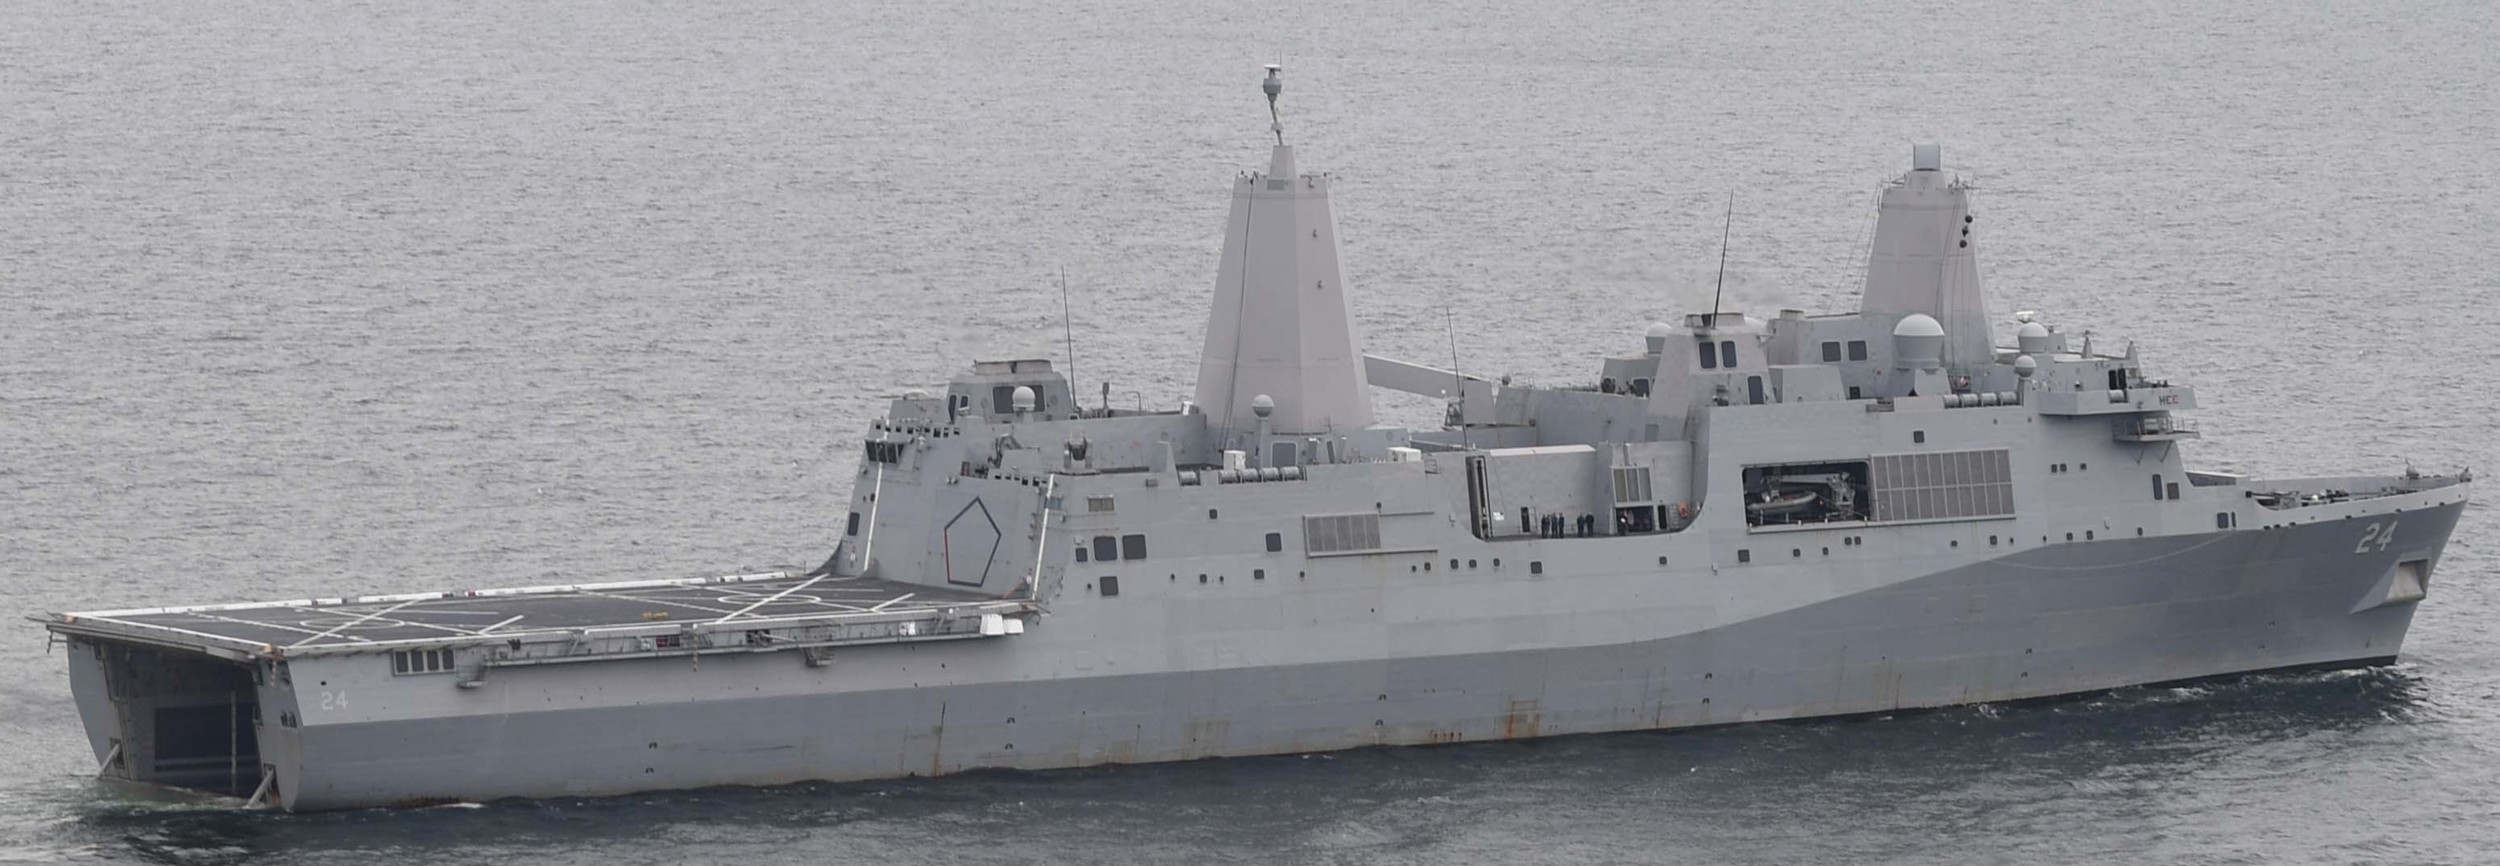 lpd-24 uss arlington amphibious transport dock landing ship us navy baltops baltic sea 22